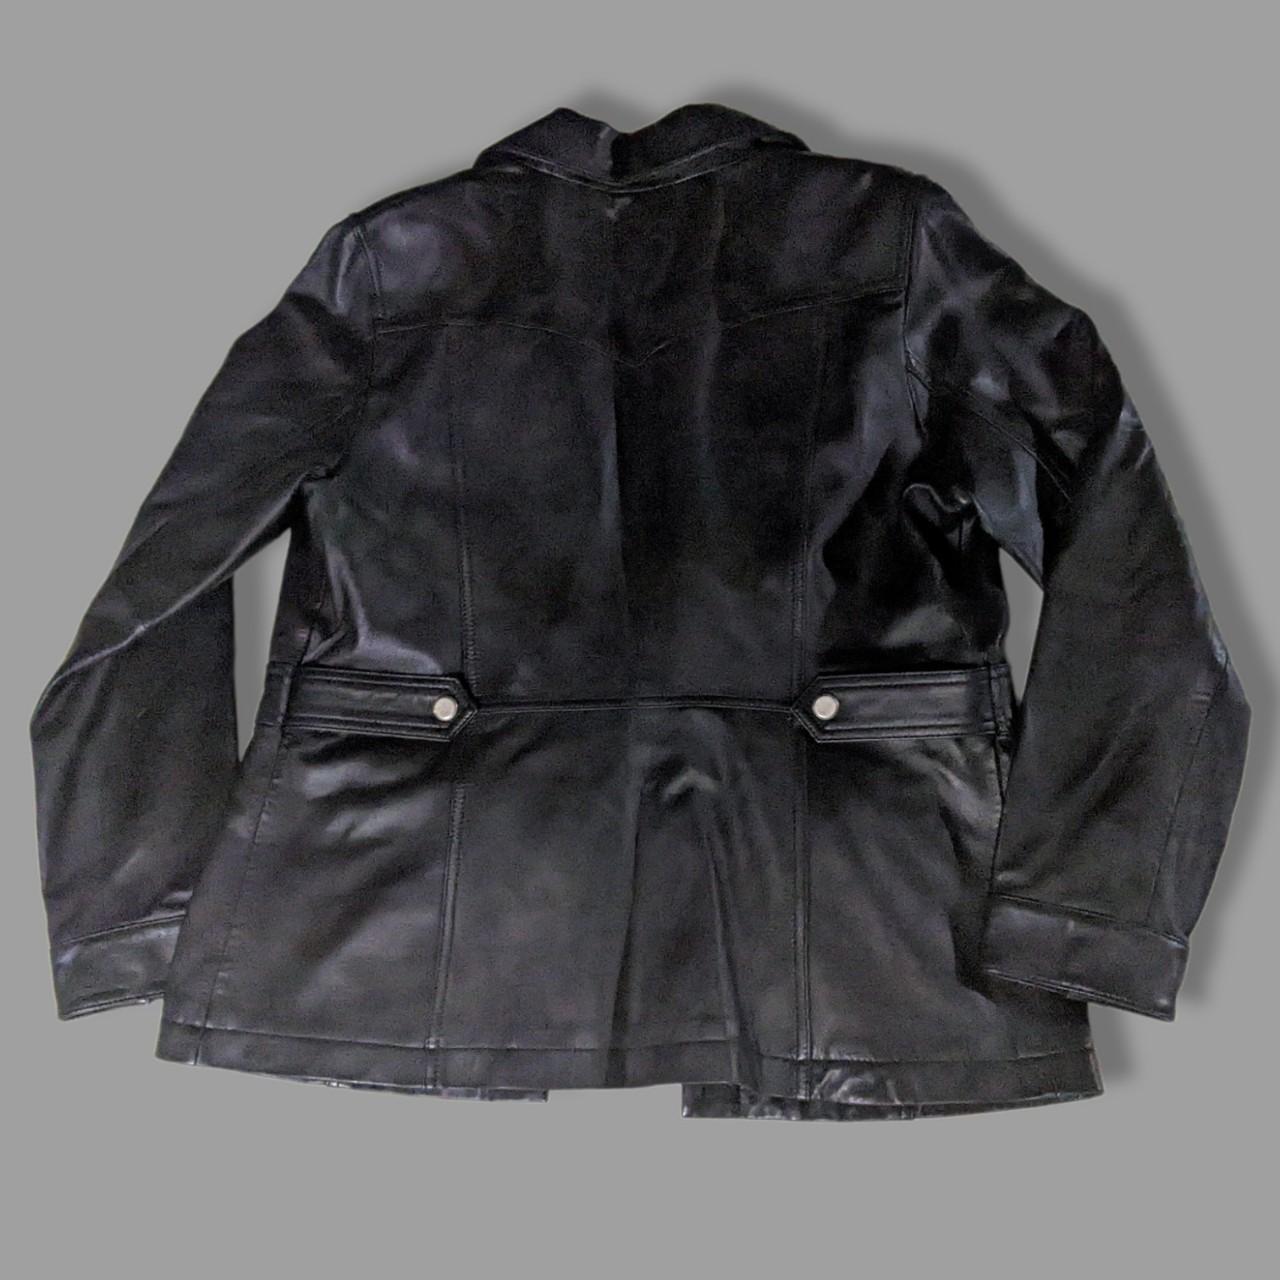 Product Image 4 - #Vintage #90s Women's #Leather #Jacket
It